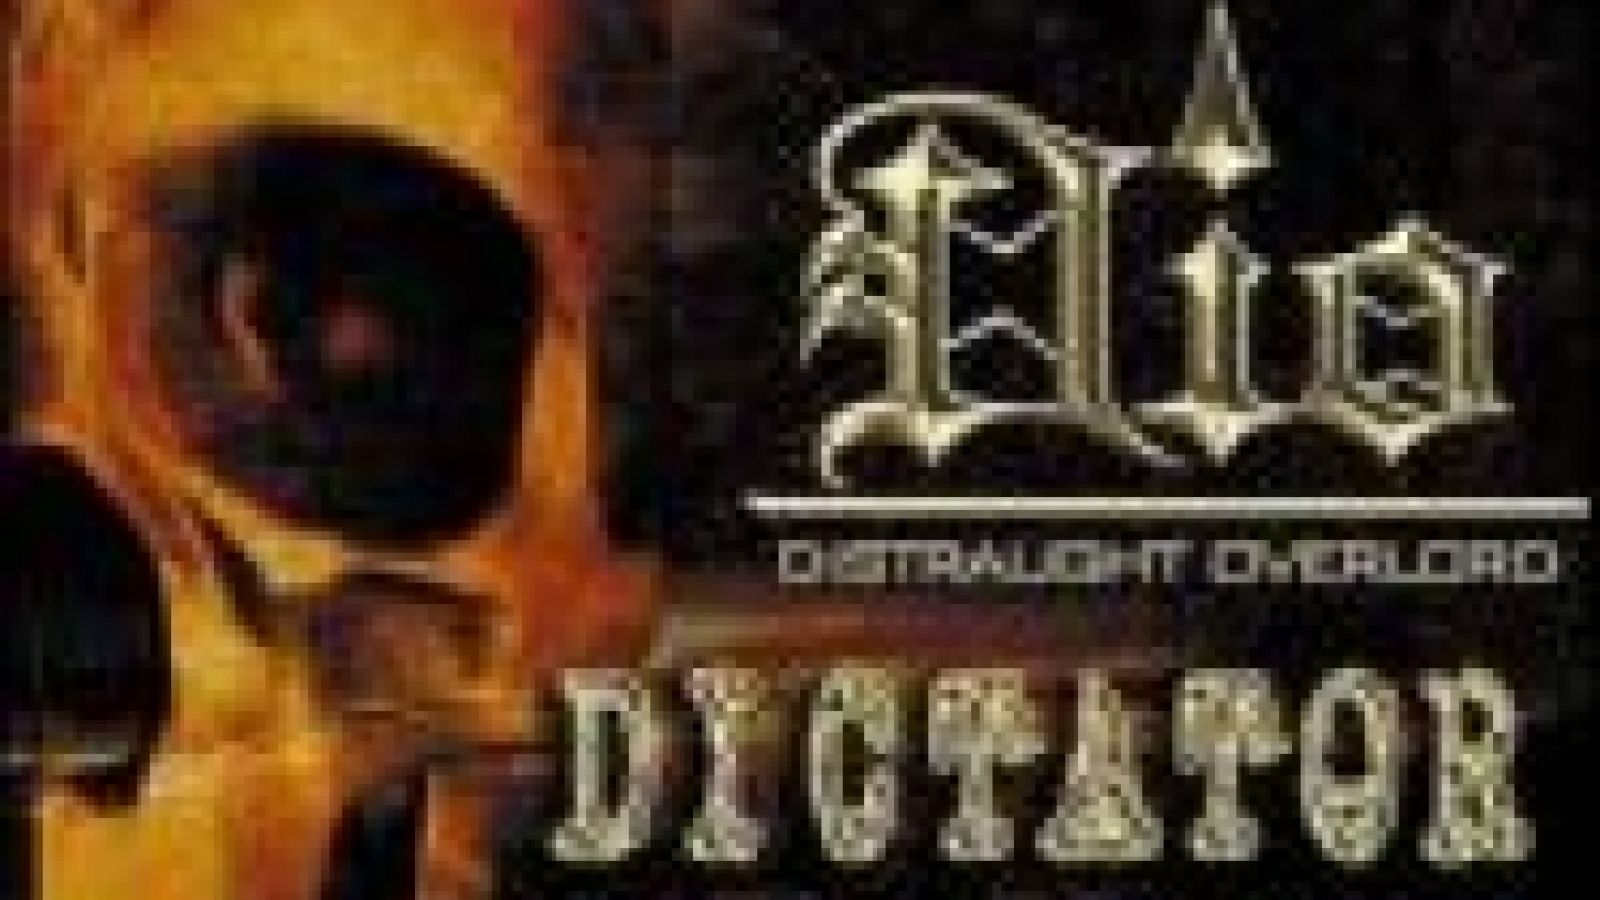 Dio - distraught overlord julkaisee albumin © JaME